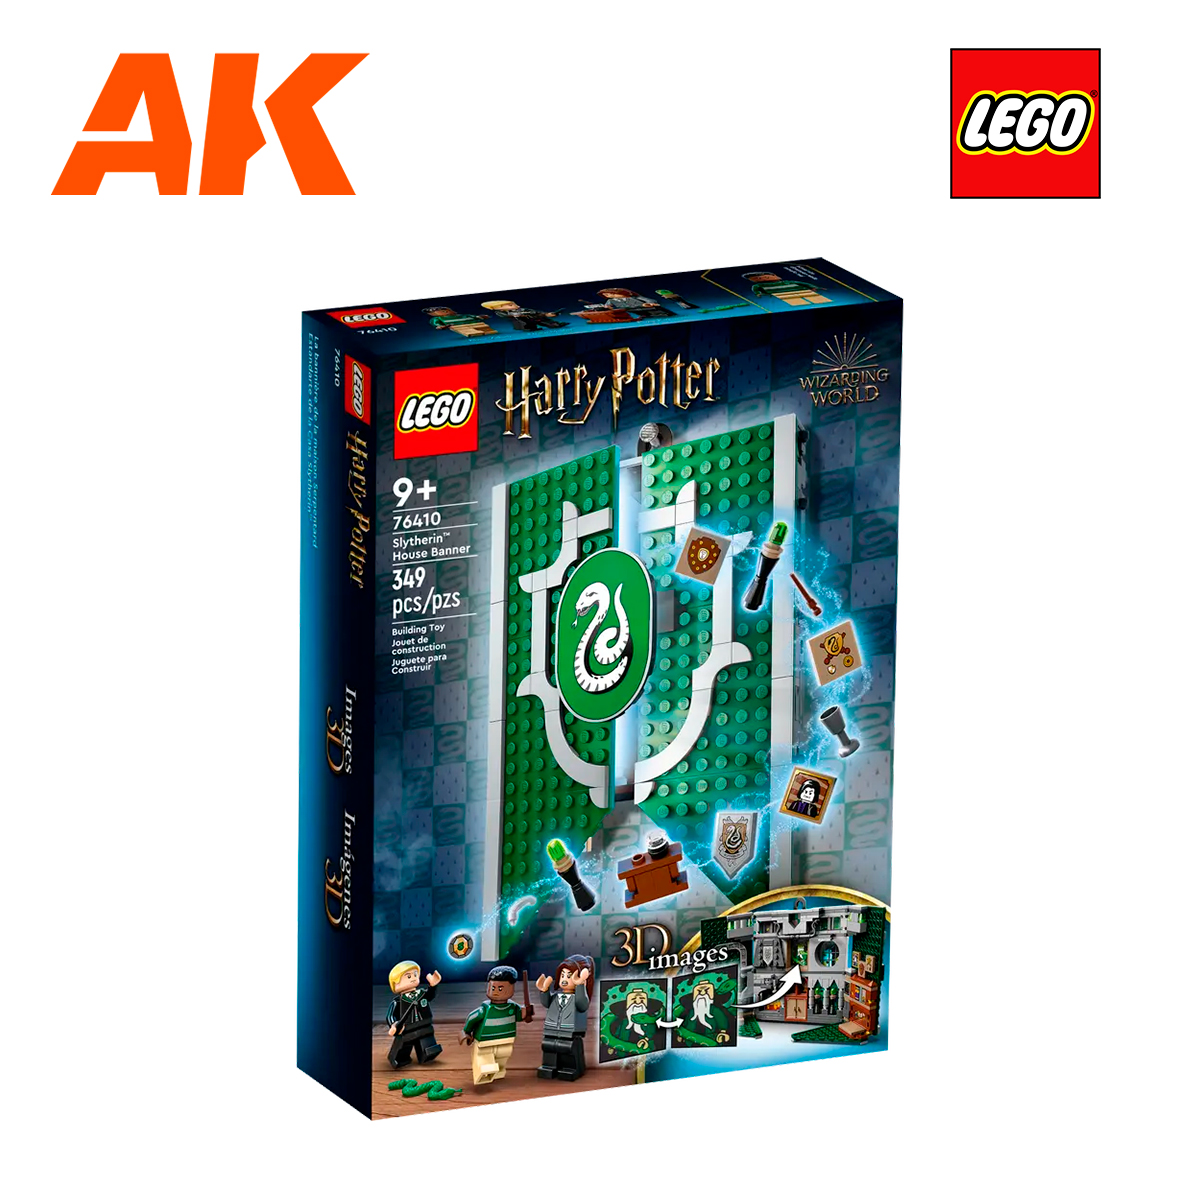 Gryffindor™ House Banner 76409 | Harry Potter™ | Buy online at the Official  LEGO® Shop US